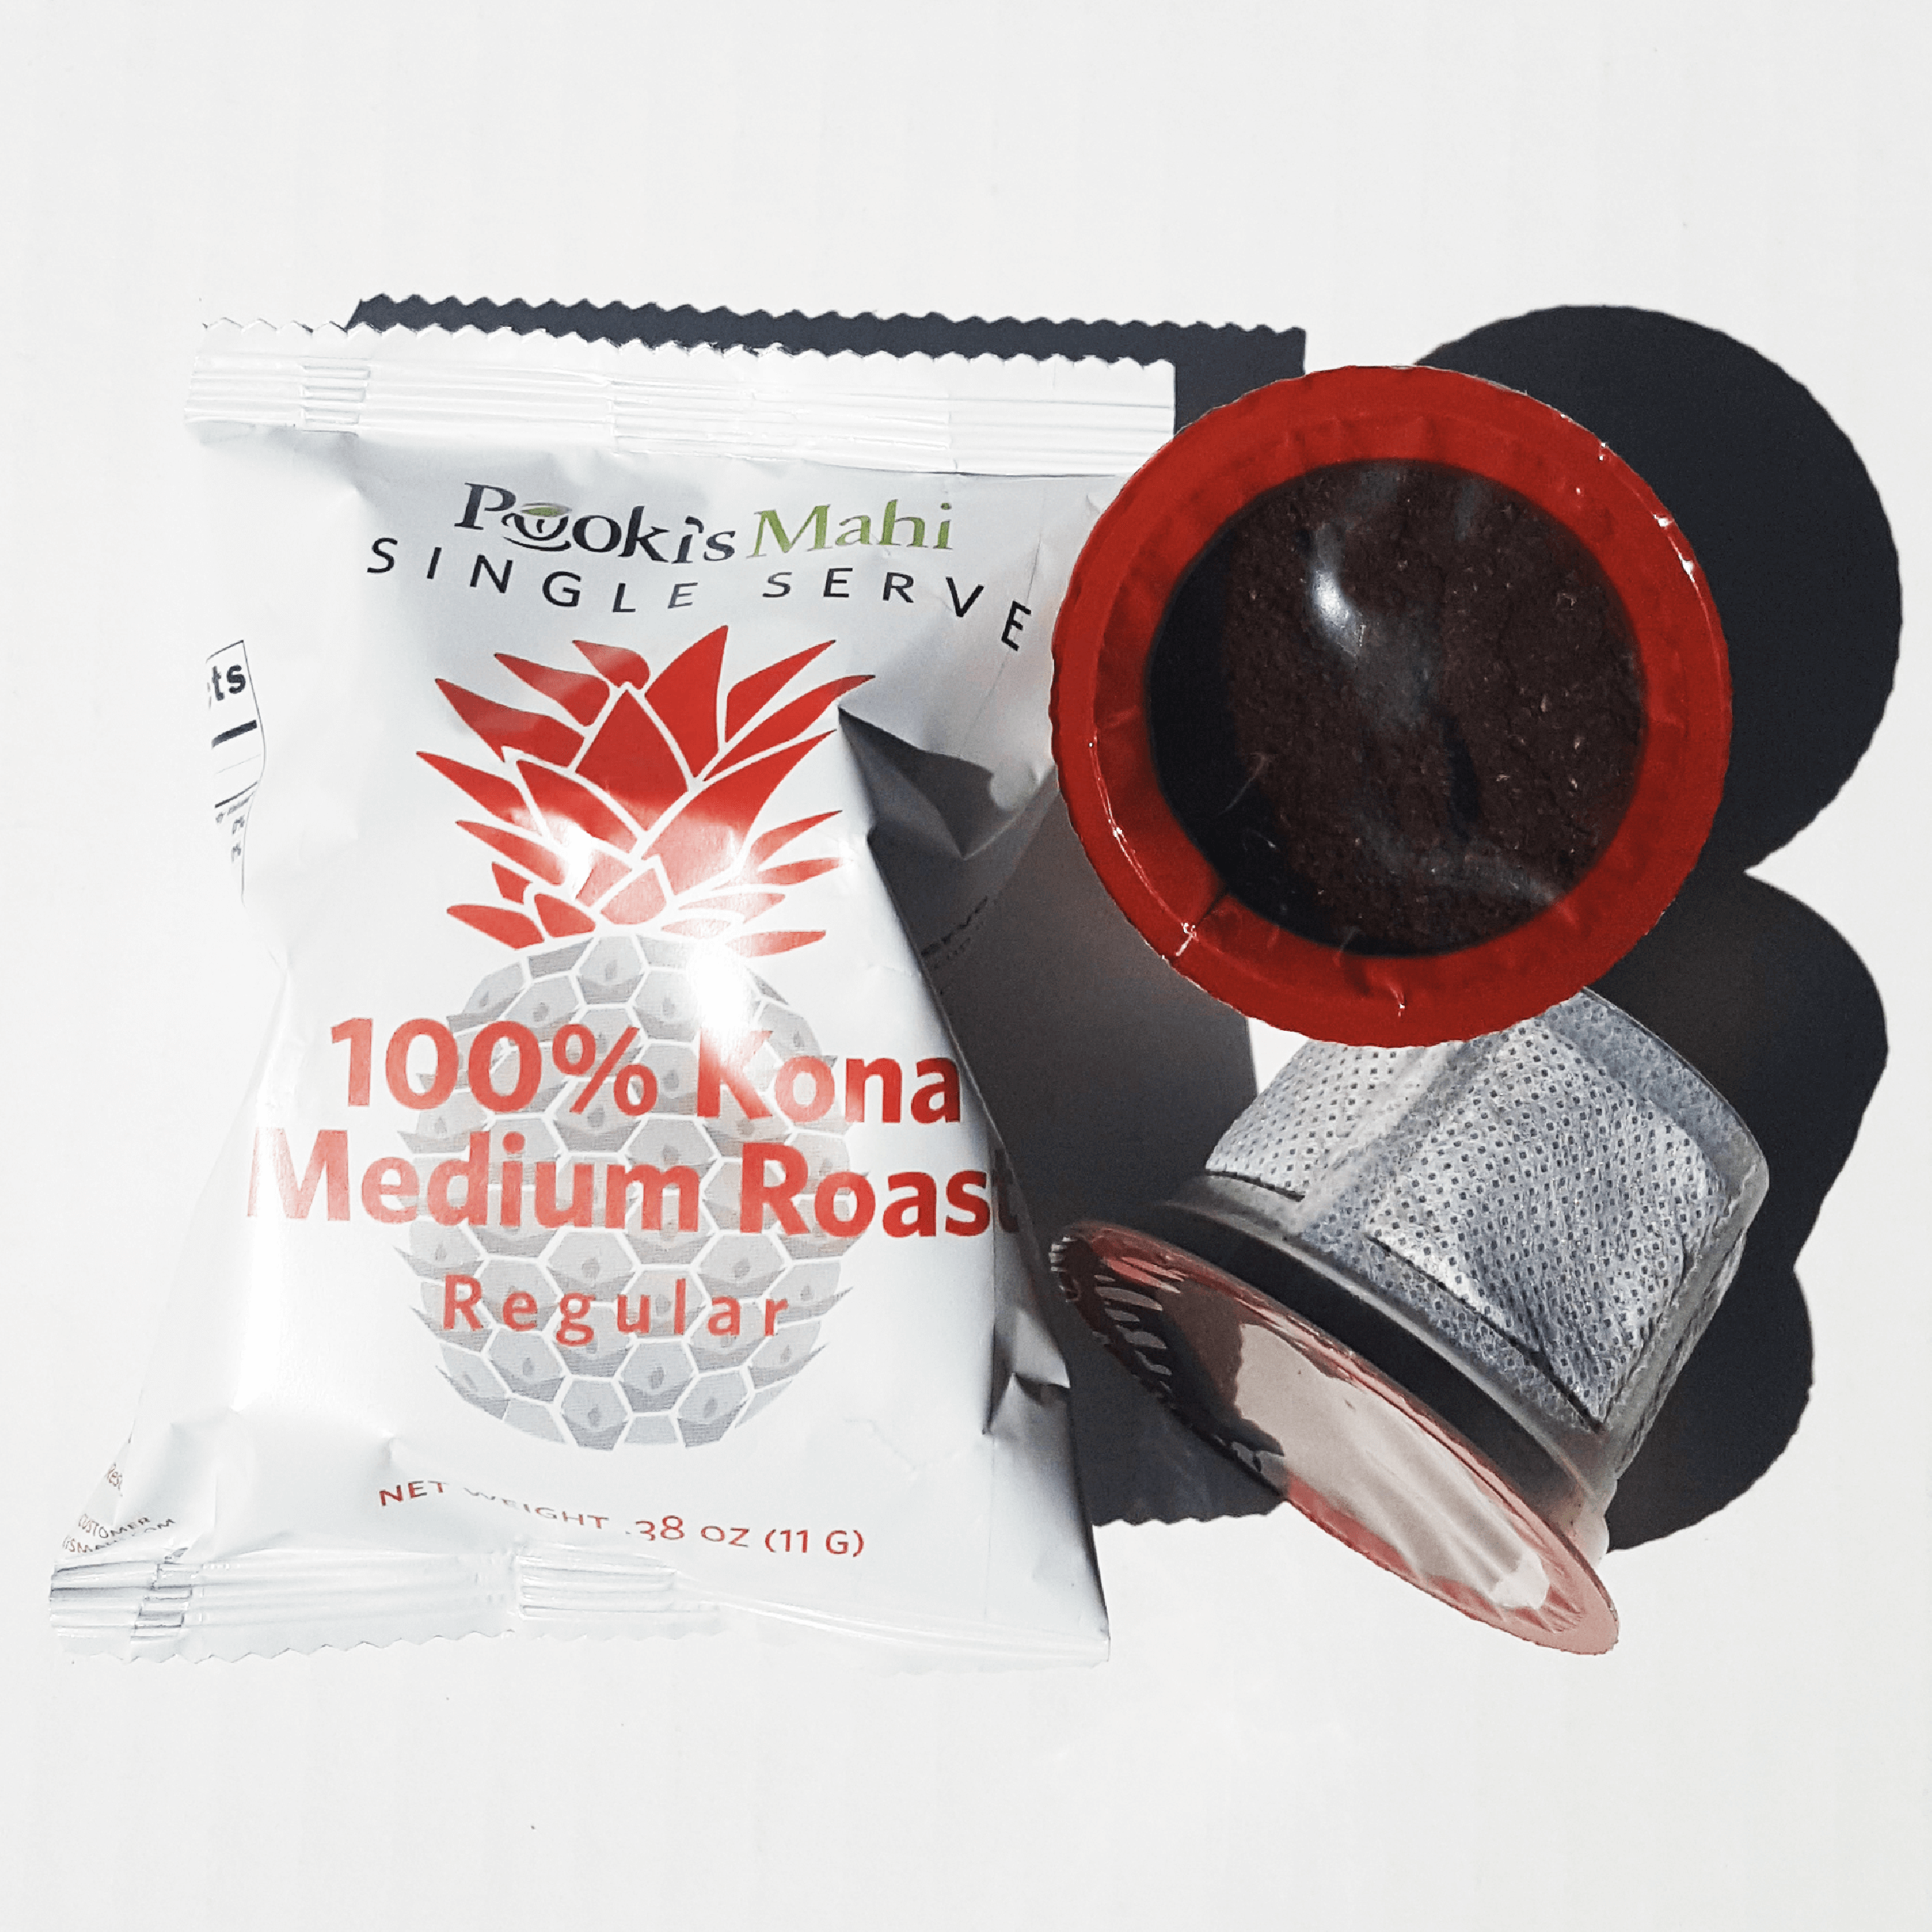 Private label Pooki's Mahi 100% Kona coffee pods